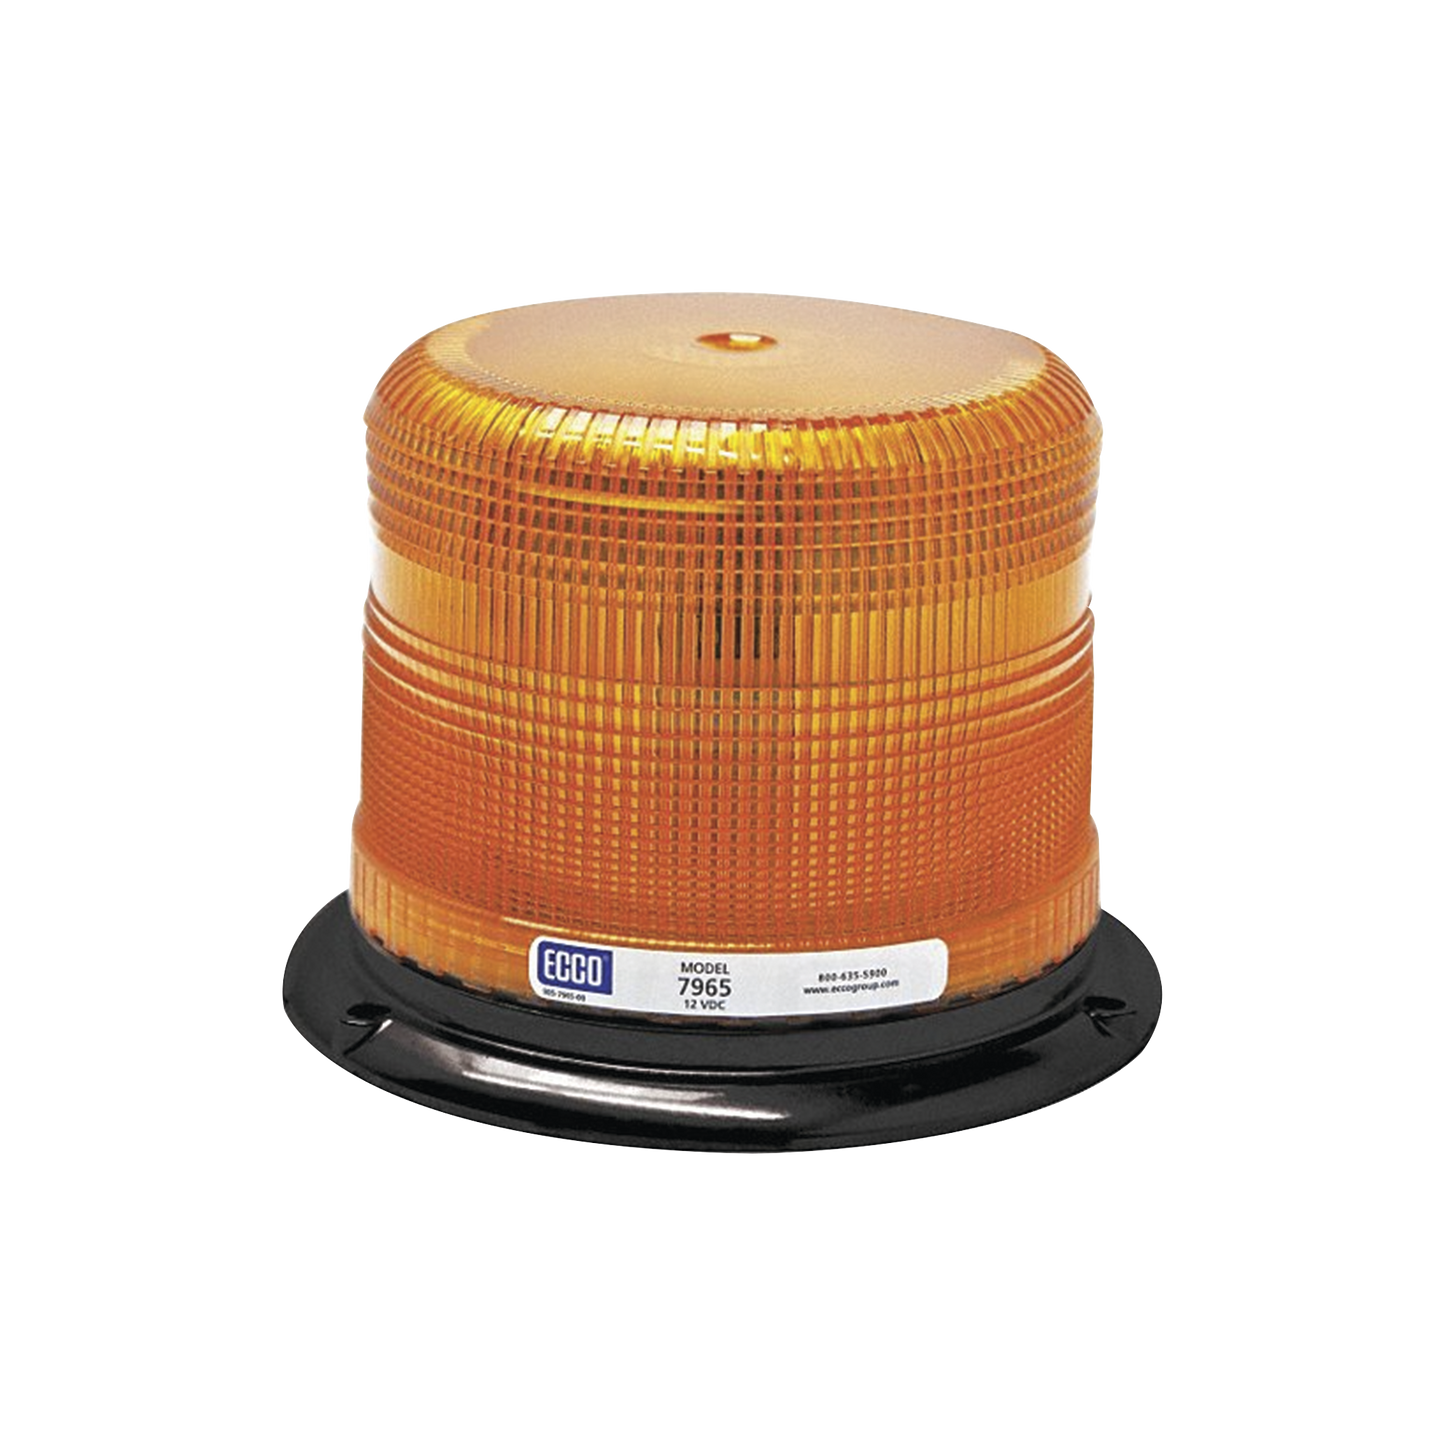 Beacon Light: Beacon Light, 11 Flash Patterns - Vehicle Lighting, Permanent, Lighter Plug, LED